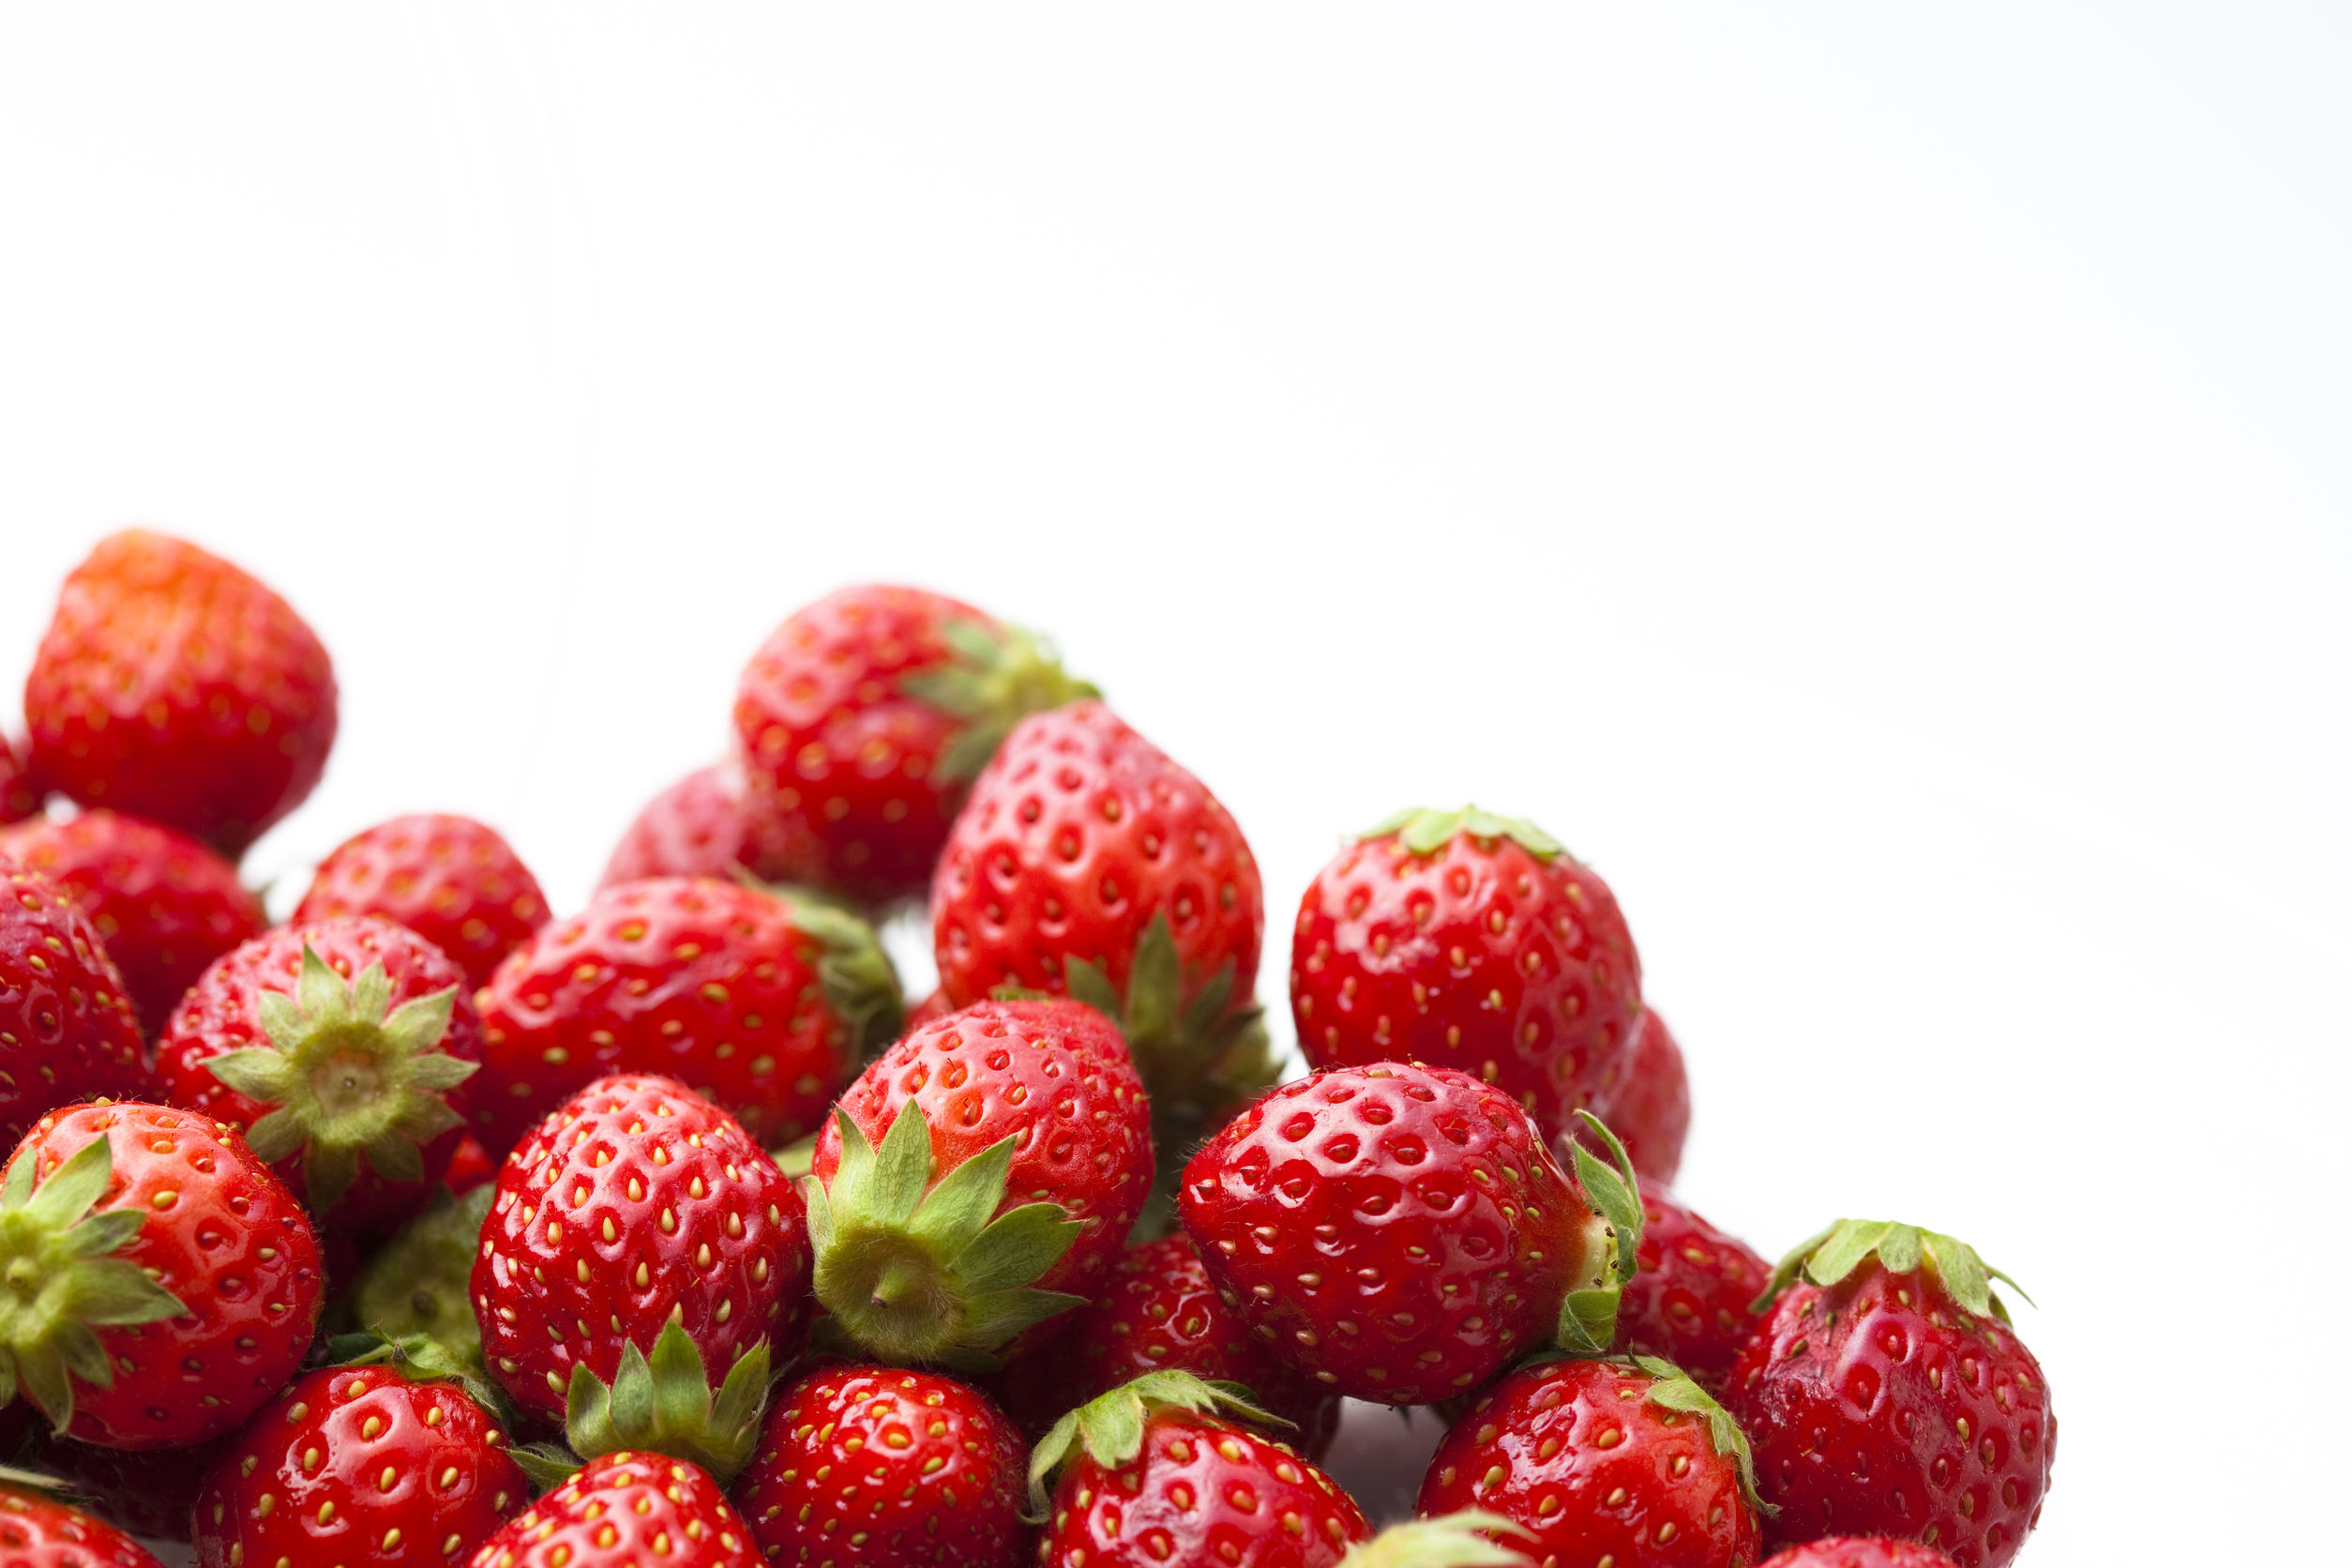 strawberries on white background 